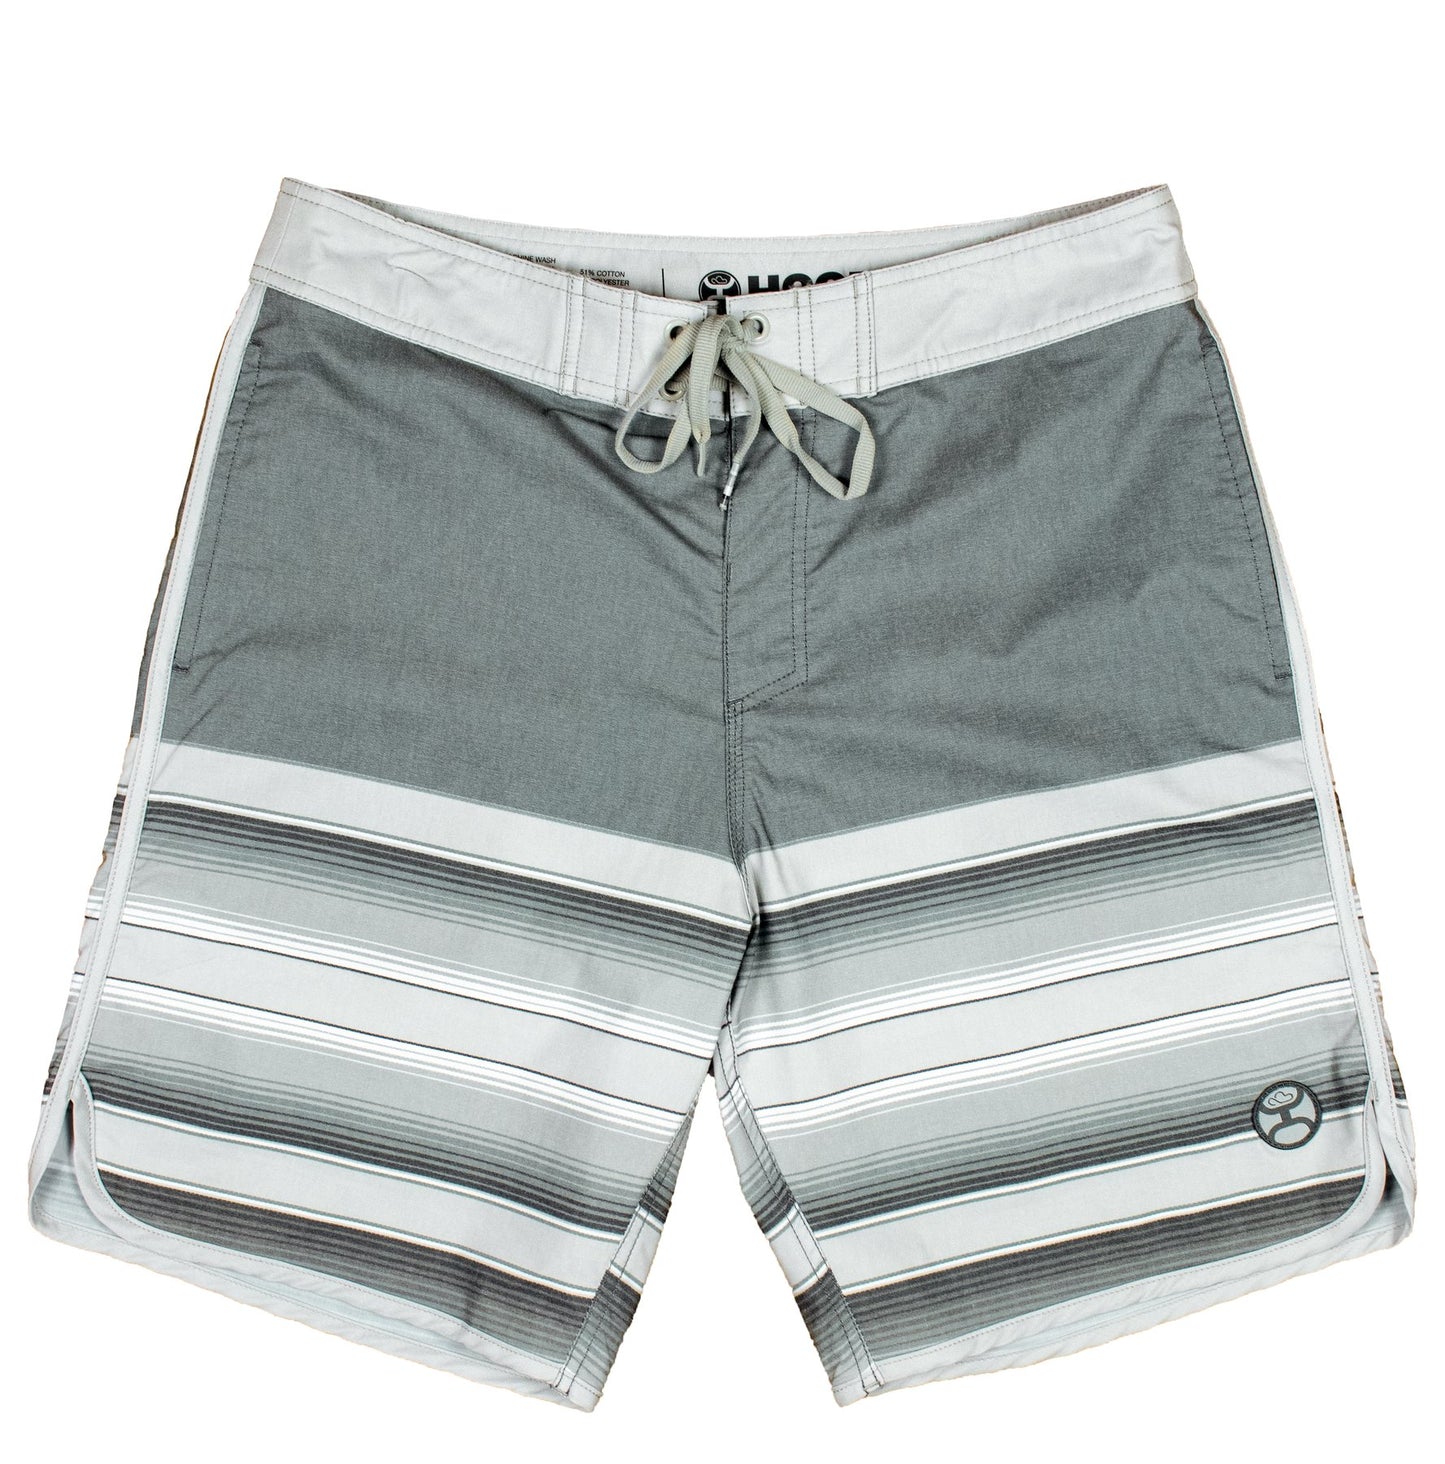 HOOey Shaka Grey/White Board Shorts